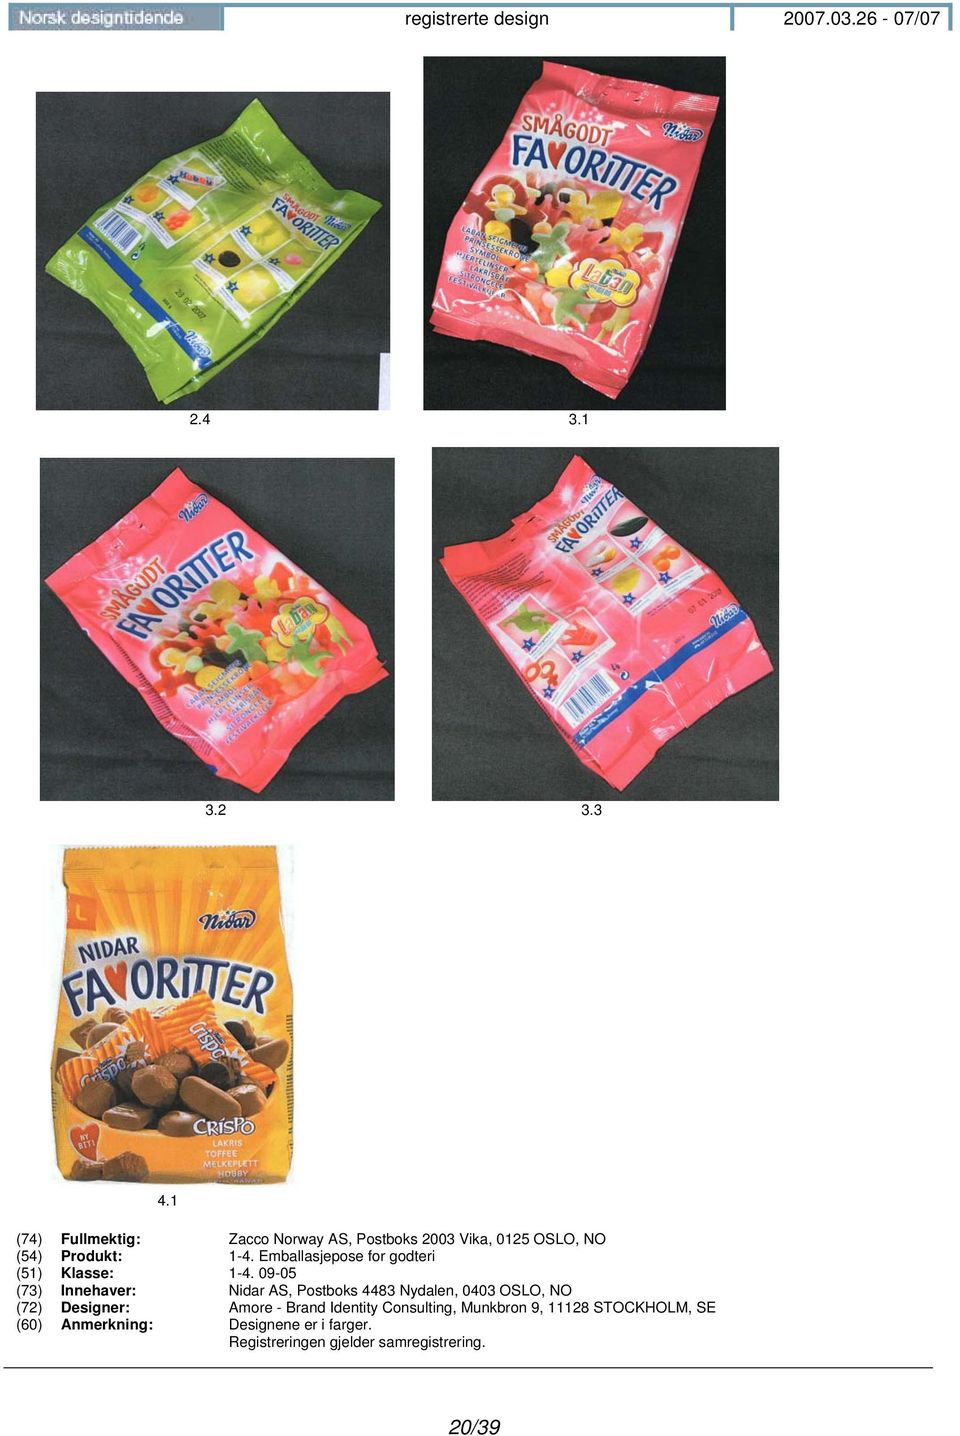 Emballasjepose for godteri (51) Klasse: 1-4.